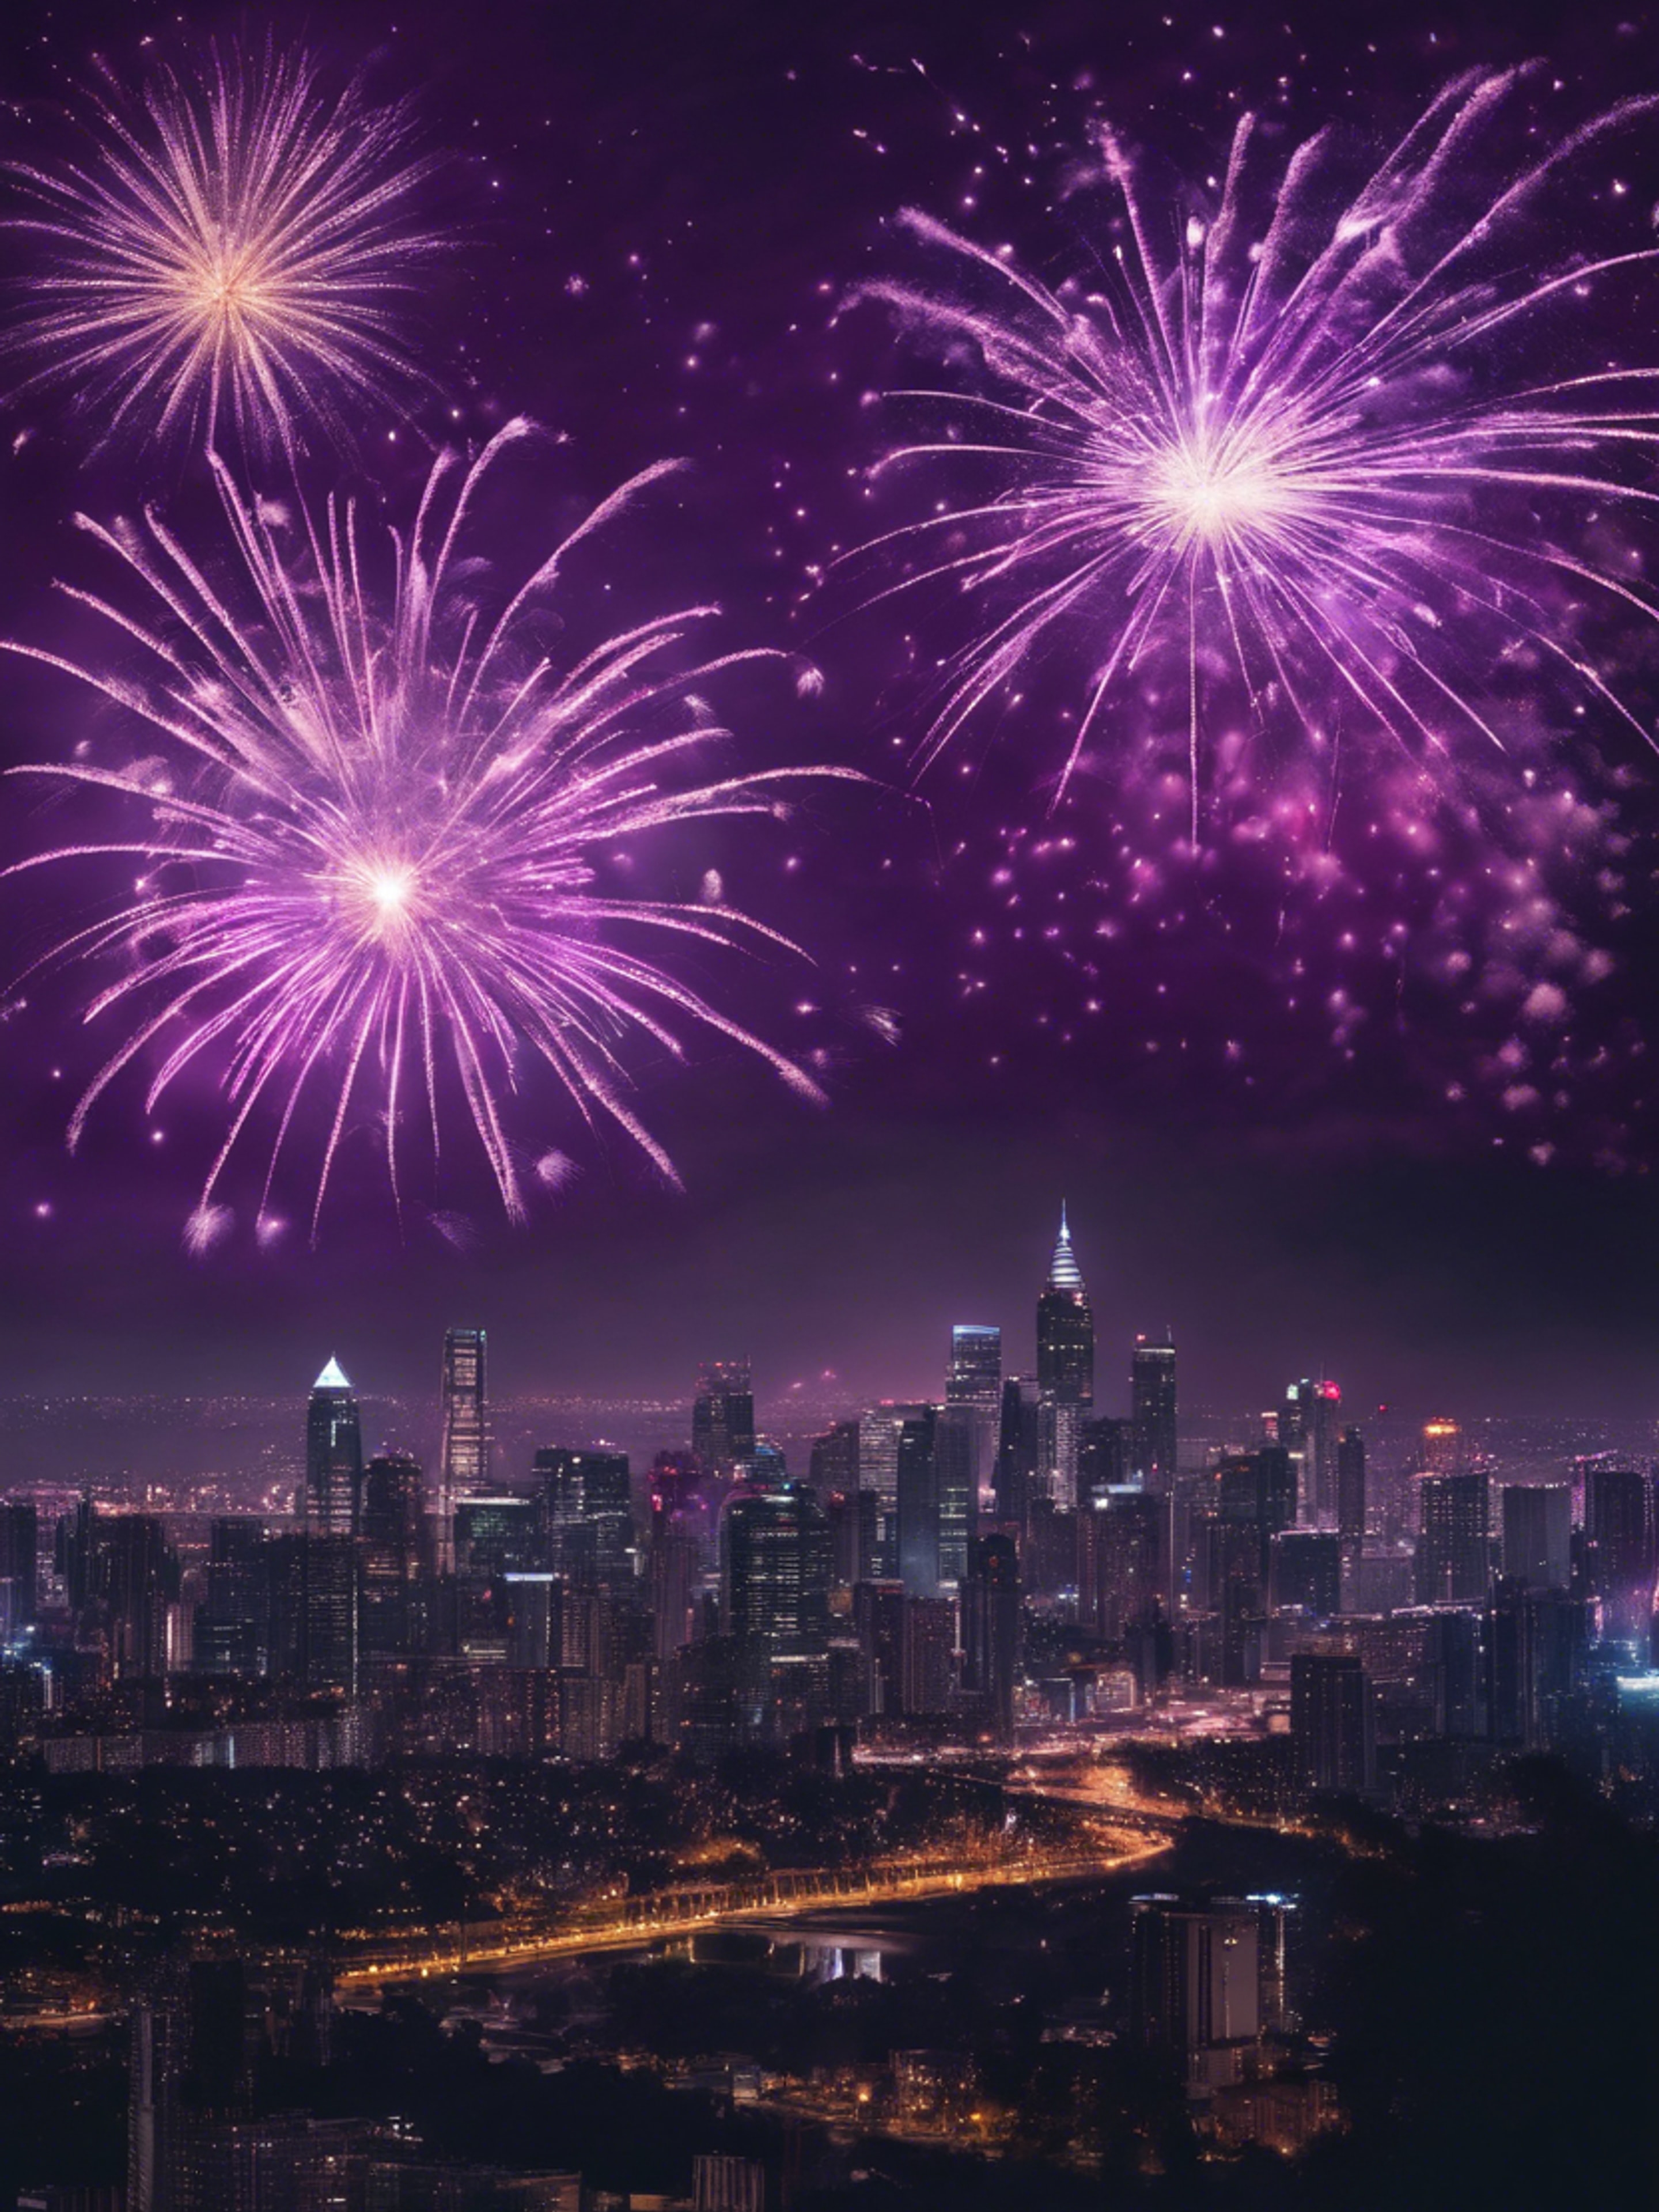 Dark purple fireworks illuminating the night's sky over an illuminated city skyline. Fondo de pantalla[a2398988017f44d3a04c]